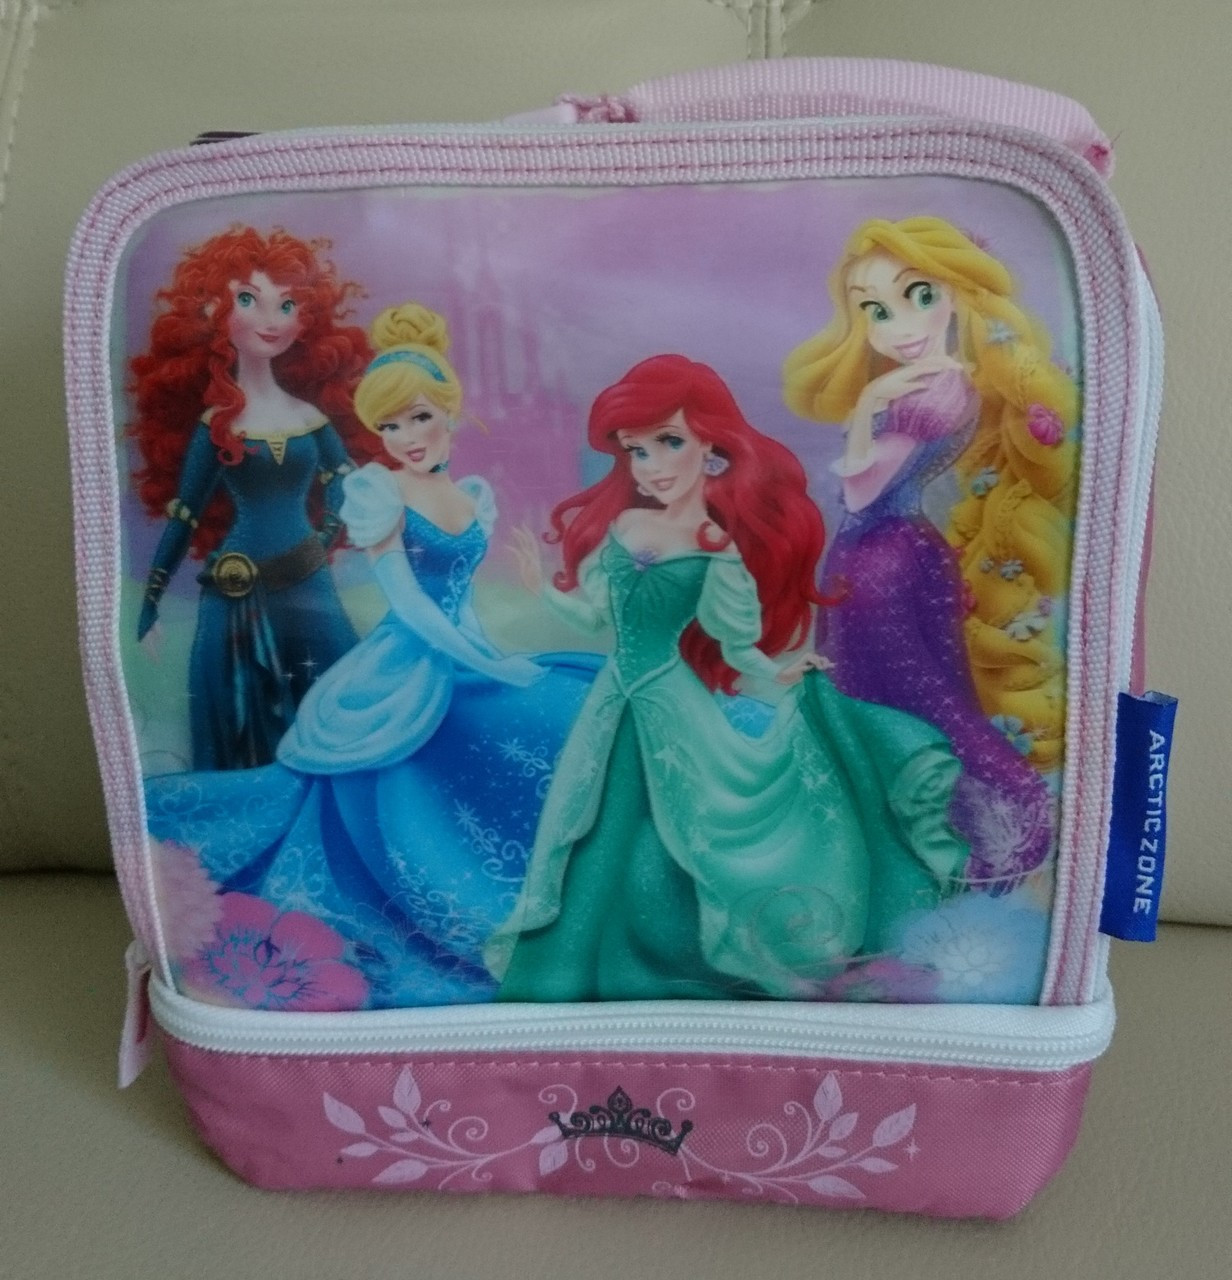 Disney Princess Disney Princess Blue & Pink Lunch Box